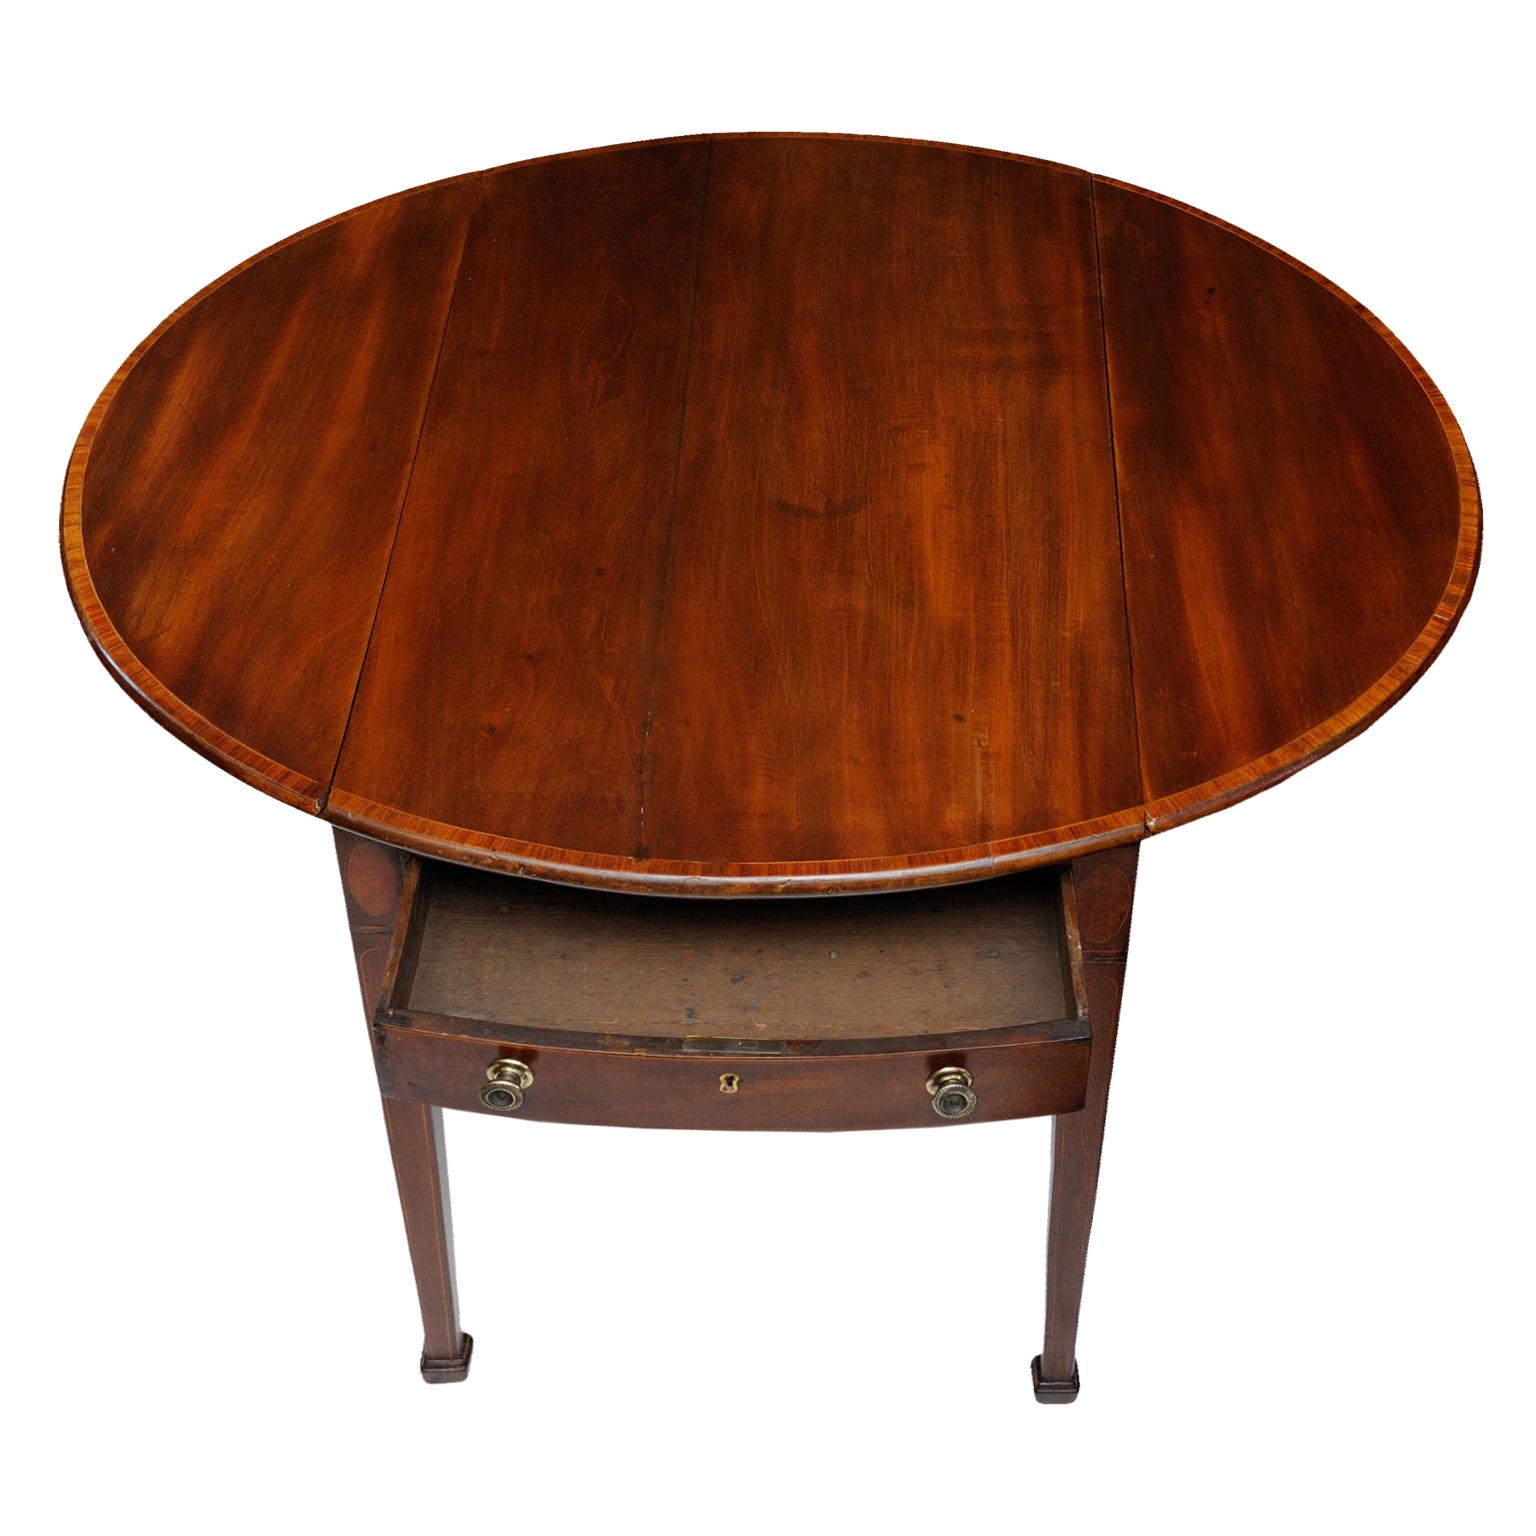 Polished English George III Hepplewhite Period Mahogany Oval Pembroke Table, circa 1790 For Sale